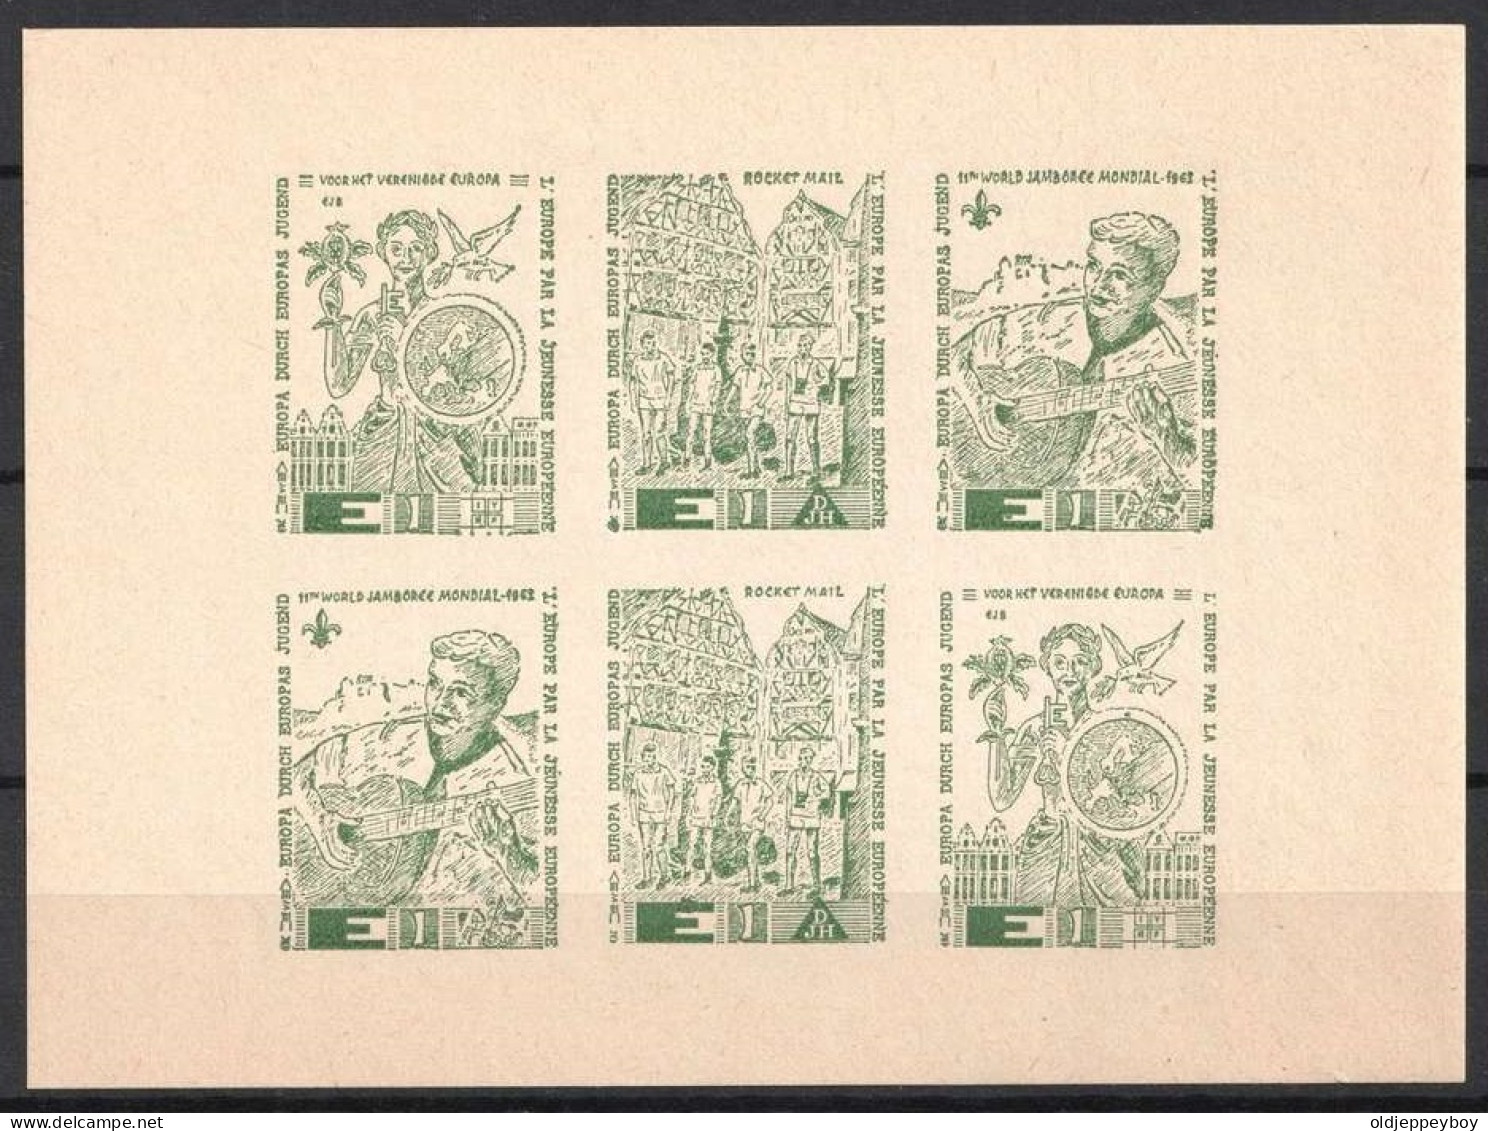 MNH** 1963 IMPERFORATED BLOCK Raketenpost Cinderellas Reklamemarke Rocket Mail JUGEND WORLD JAMBOREE MONDIAL SCOUTS - Unused Stamps